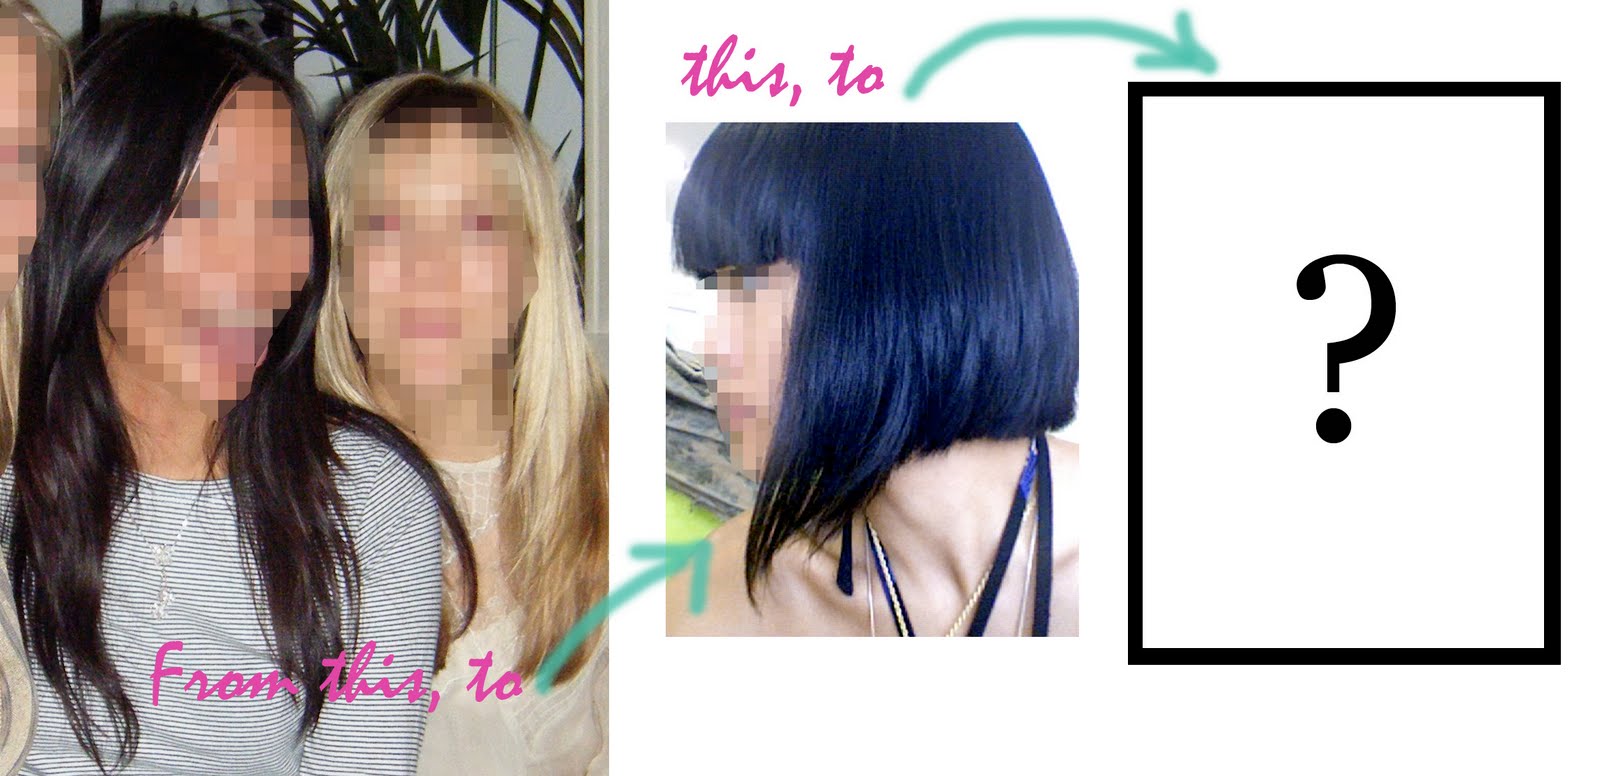 http://4.bp.blogspot.com/_EoB-OBYX850/S-w2UE3puwI/AAAAAAAABAw/-14DvBqz5hk/s1600/Hair+decisions.jpg